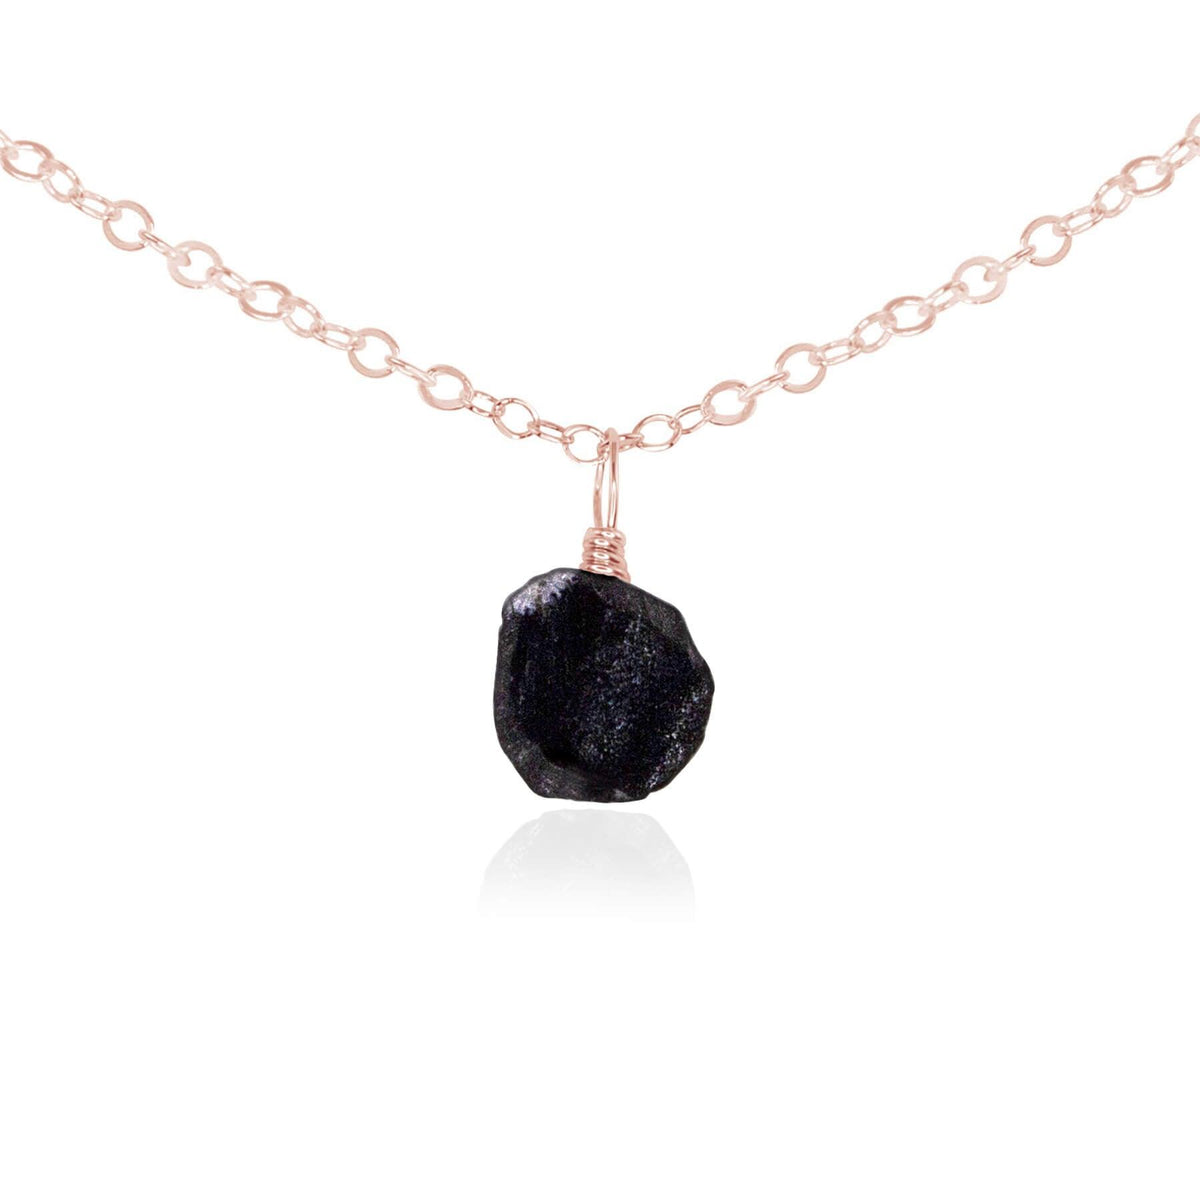 Tiny Rough Obsidian Gemstone Pendant Choker - Tiny Rough Obsidian Gemstone Pendant Choker - 14k Rose Gold Fill / Cable - Luna Tide Handmade Crystal Jewellery